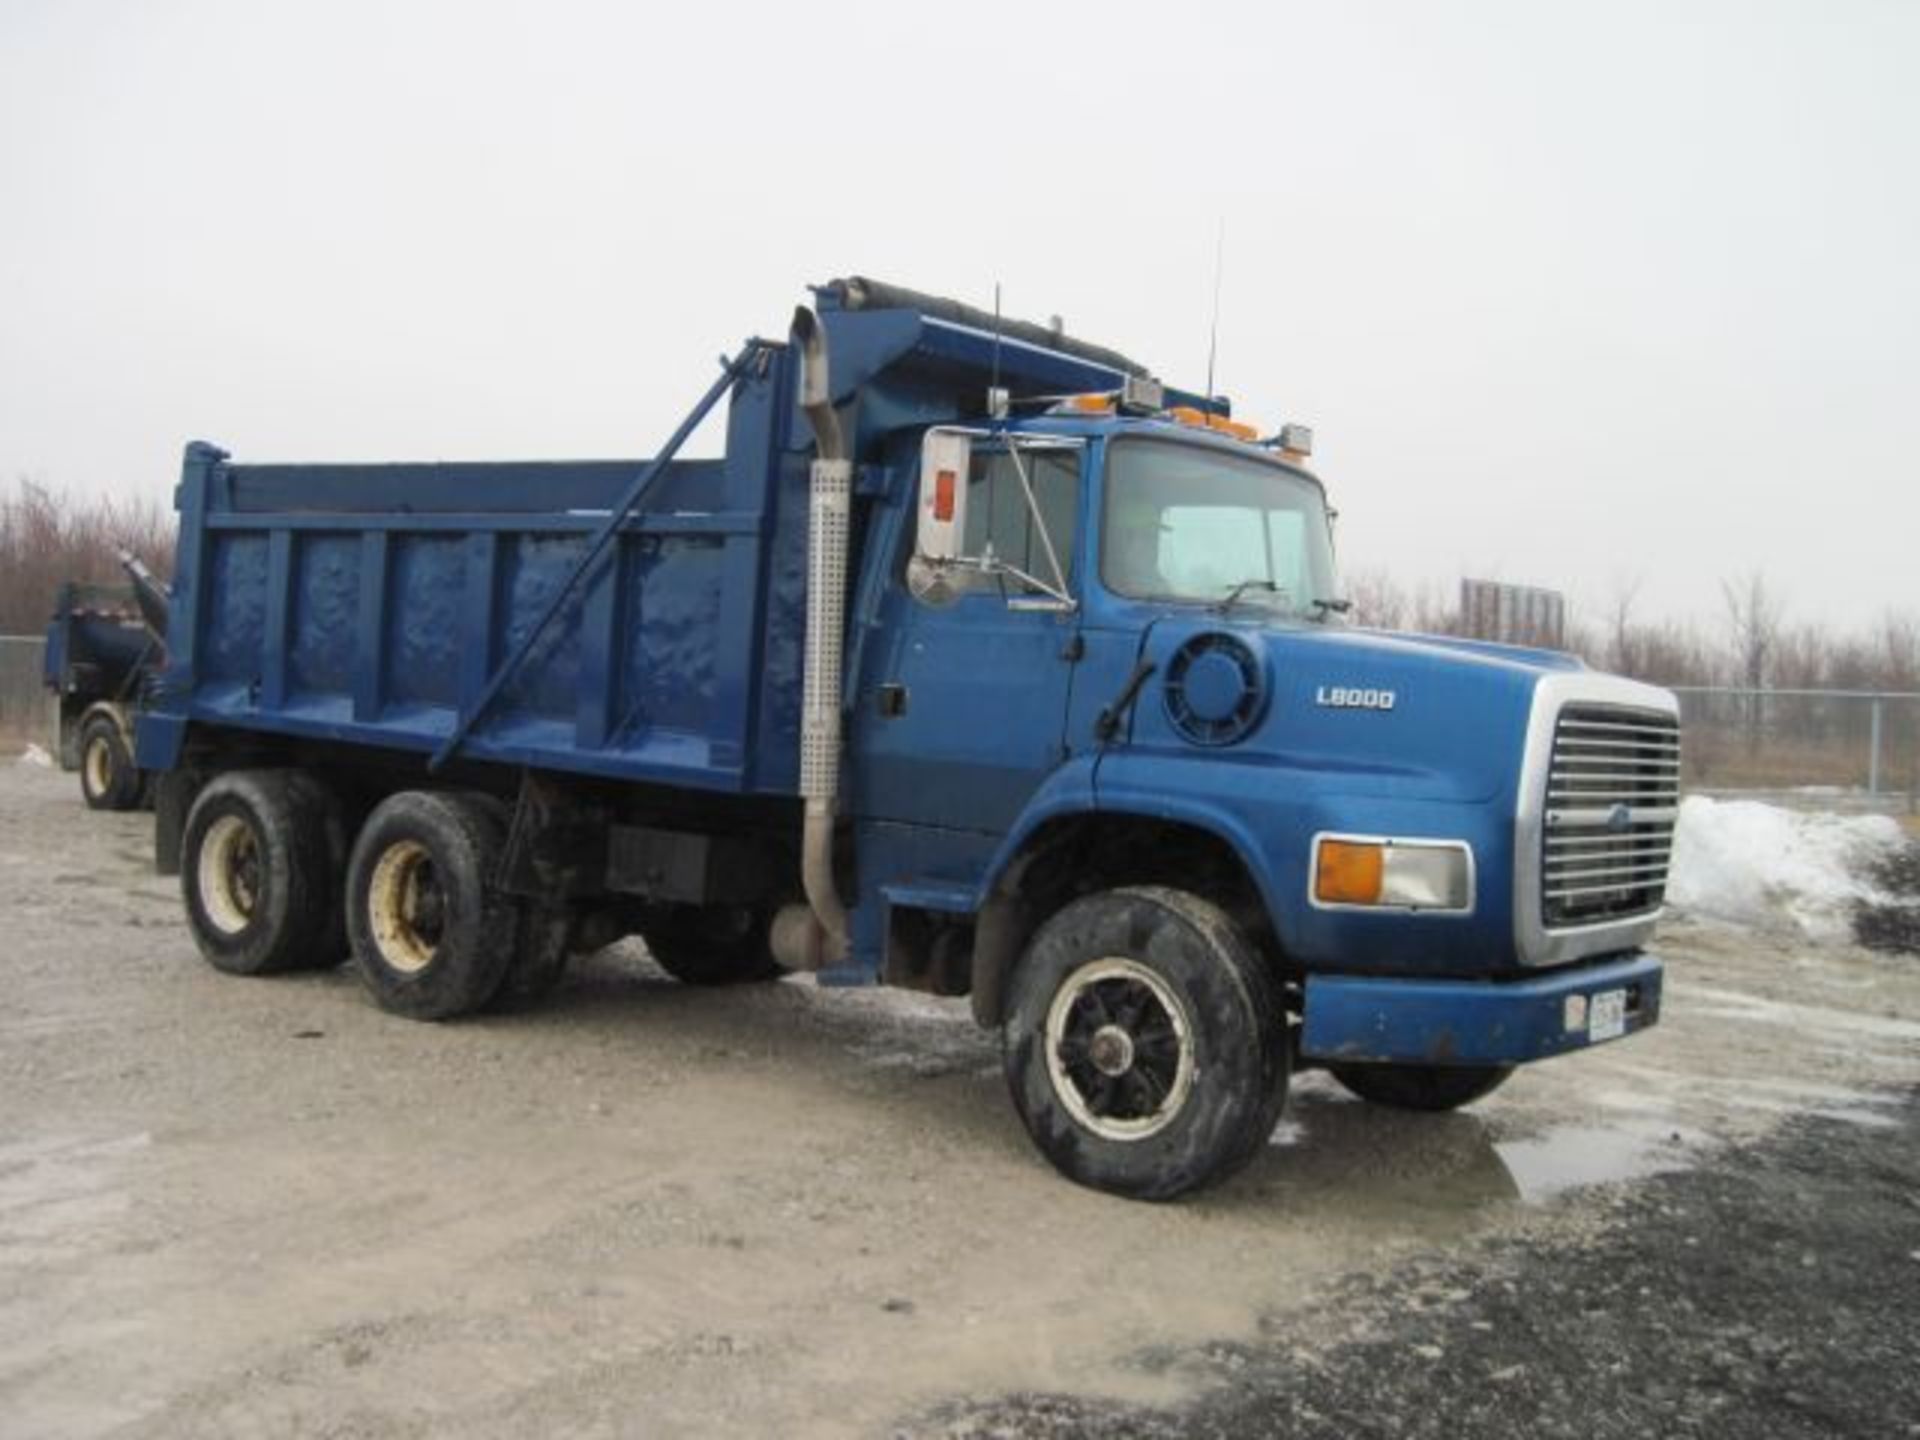 Lot# 110 1996 Ford L8000 Dump Truck 1996 Ford L8000 Dump Truck, 501227Km, Vin# 1FDYS82E2TVA18314 - Image 3 of 5